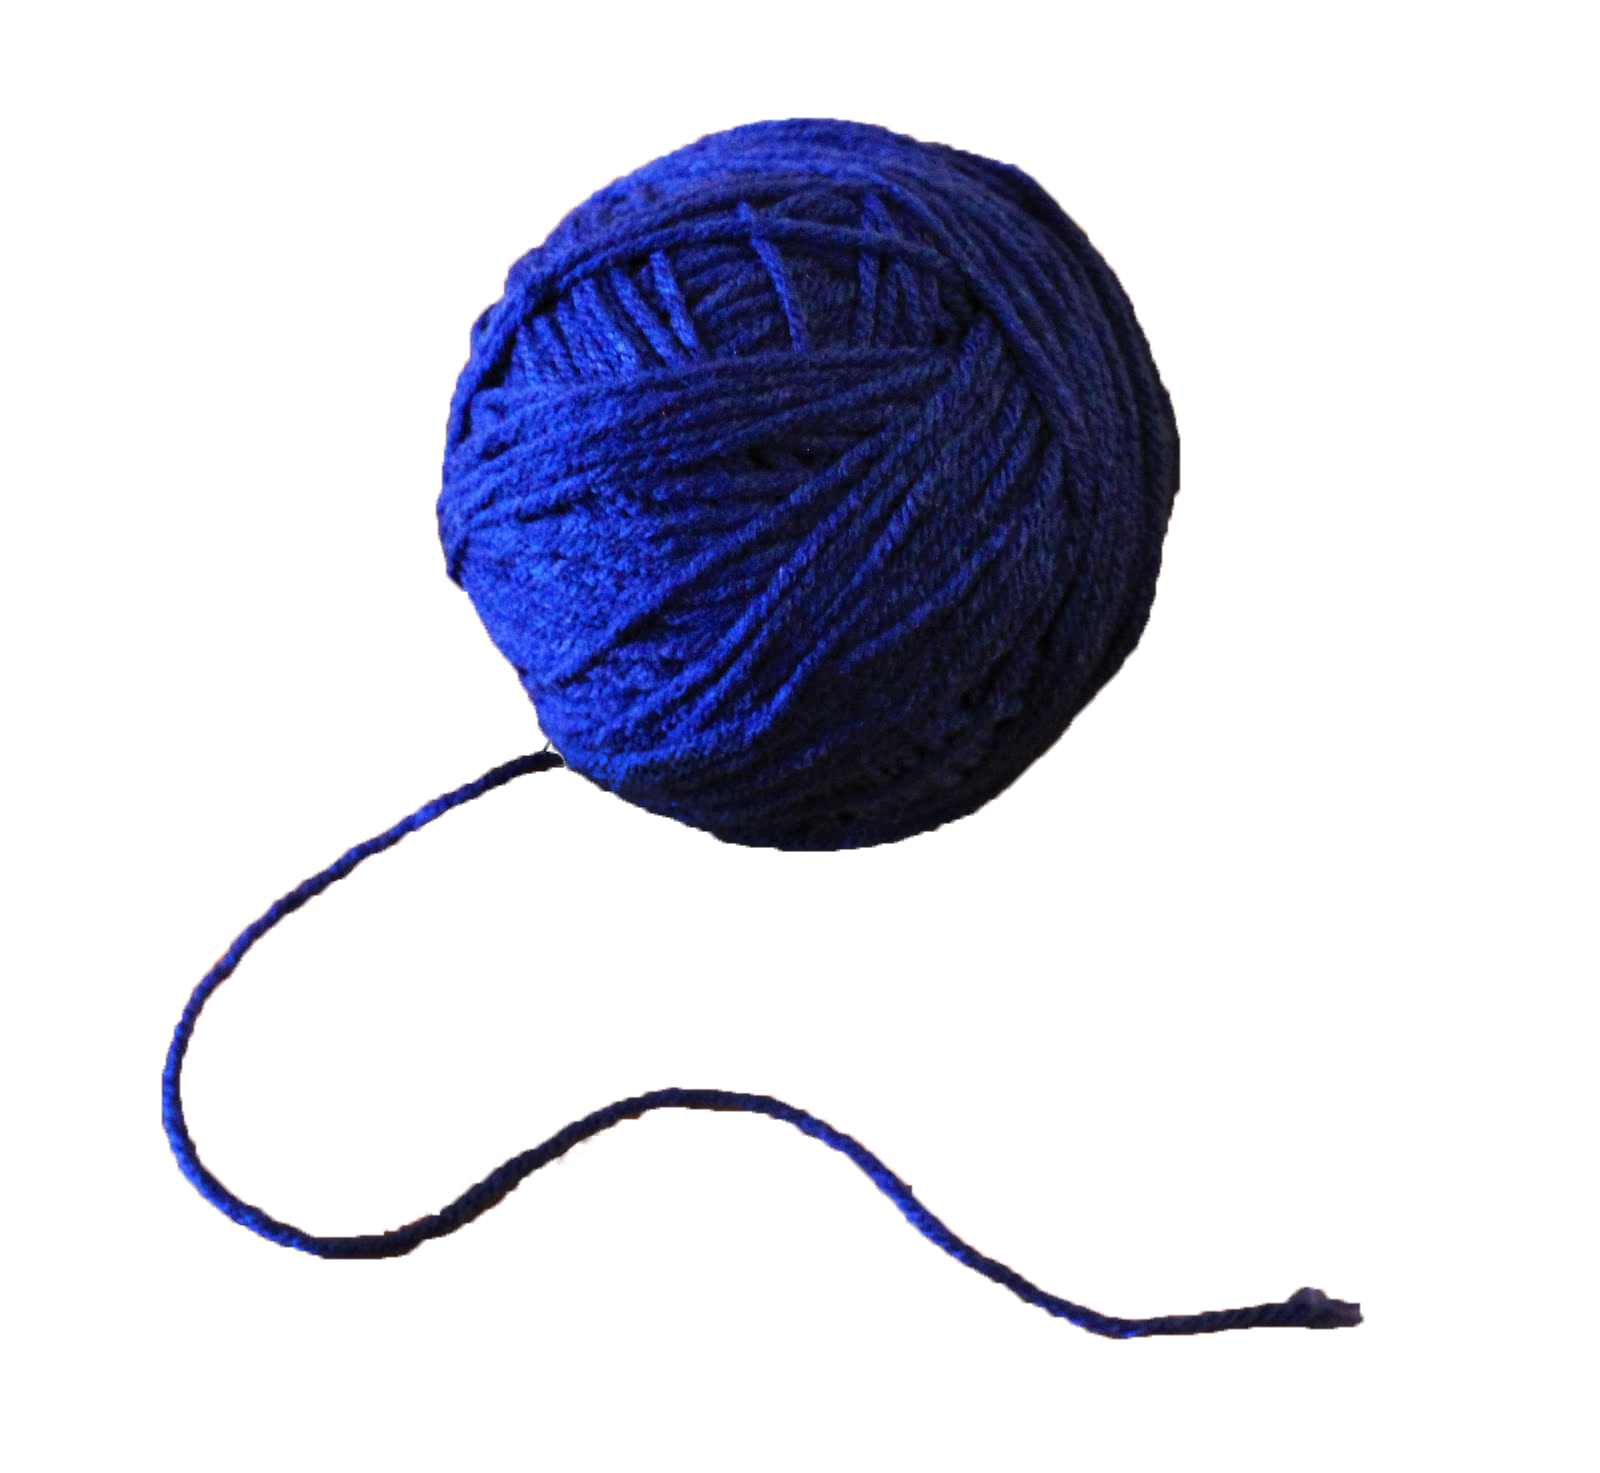 Aguja de tejido de lana de hilo PNG imagen Transparente